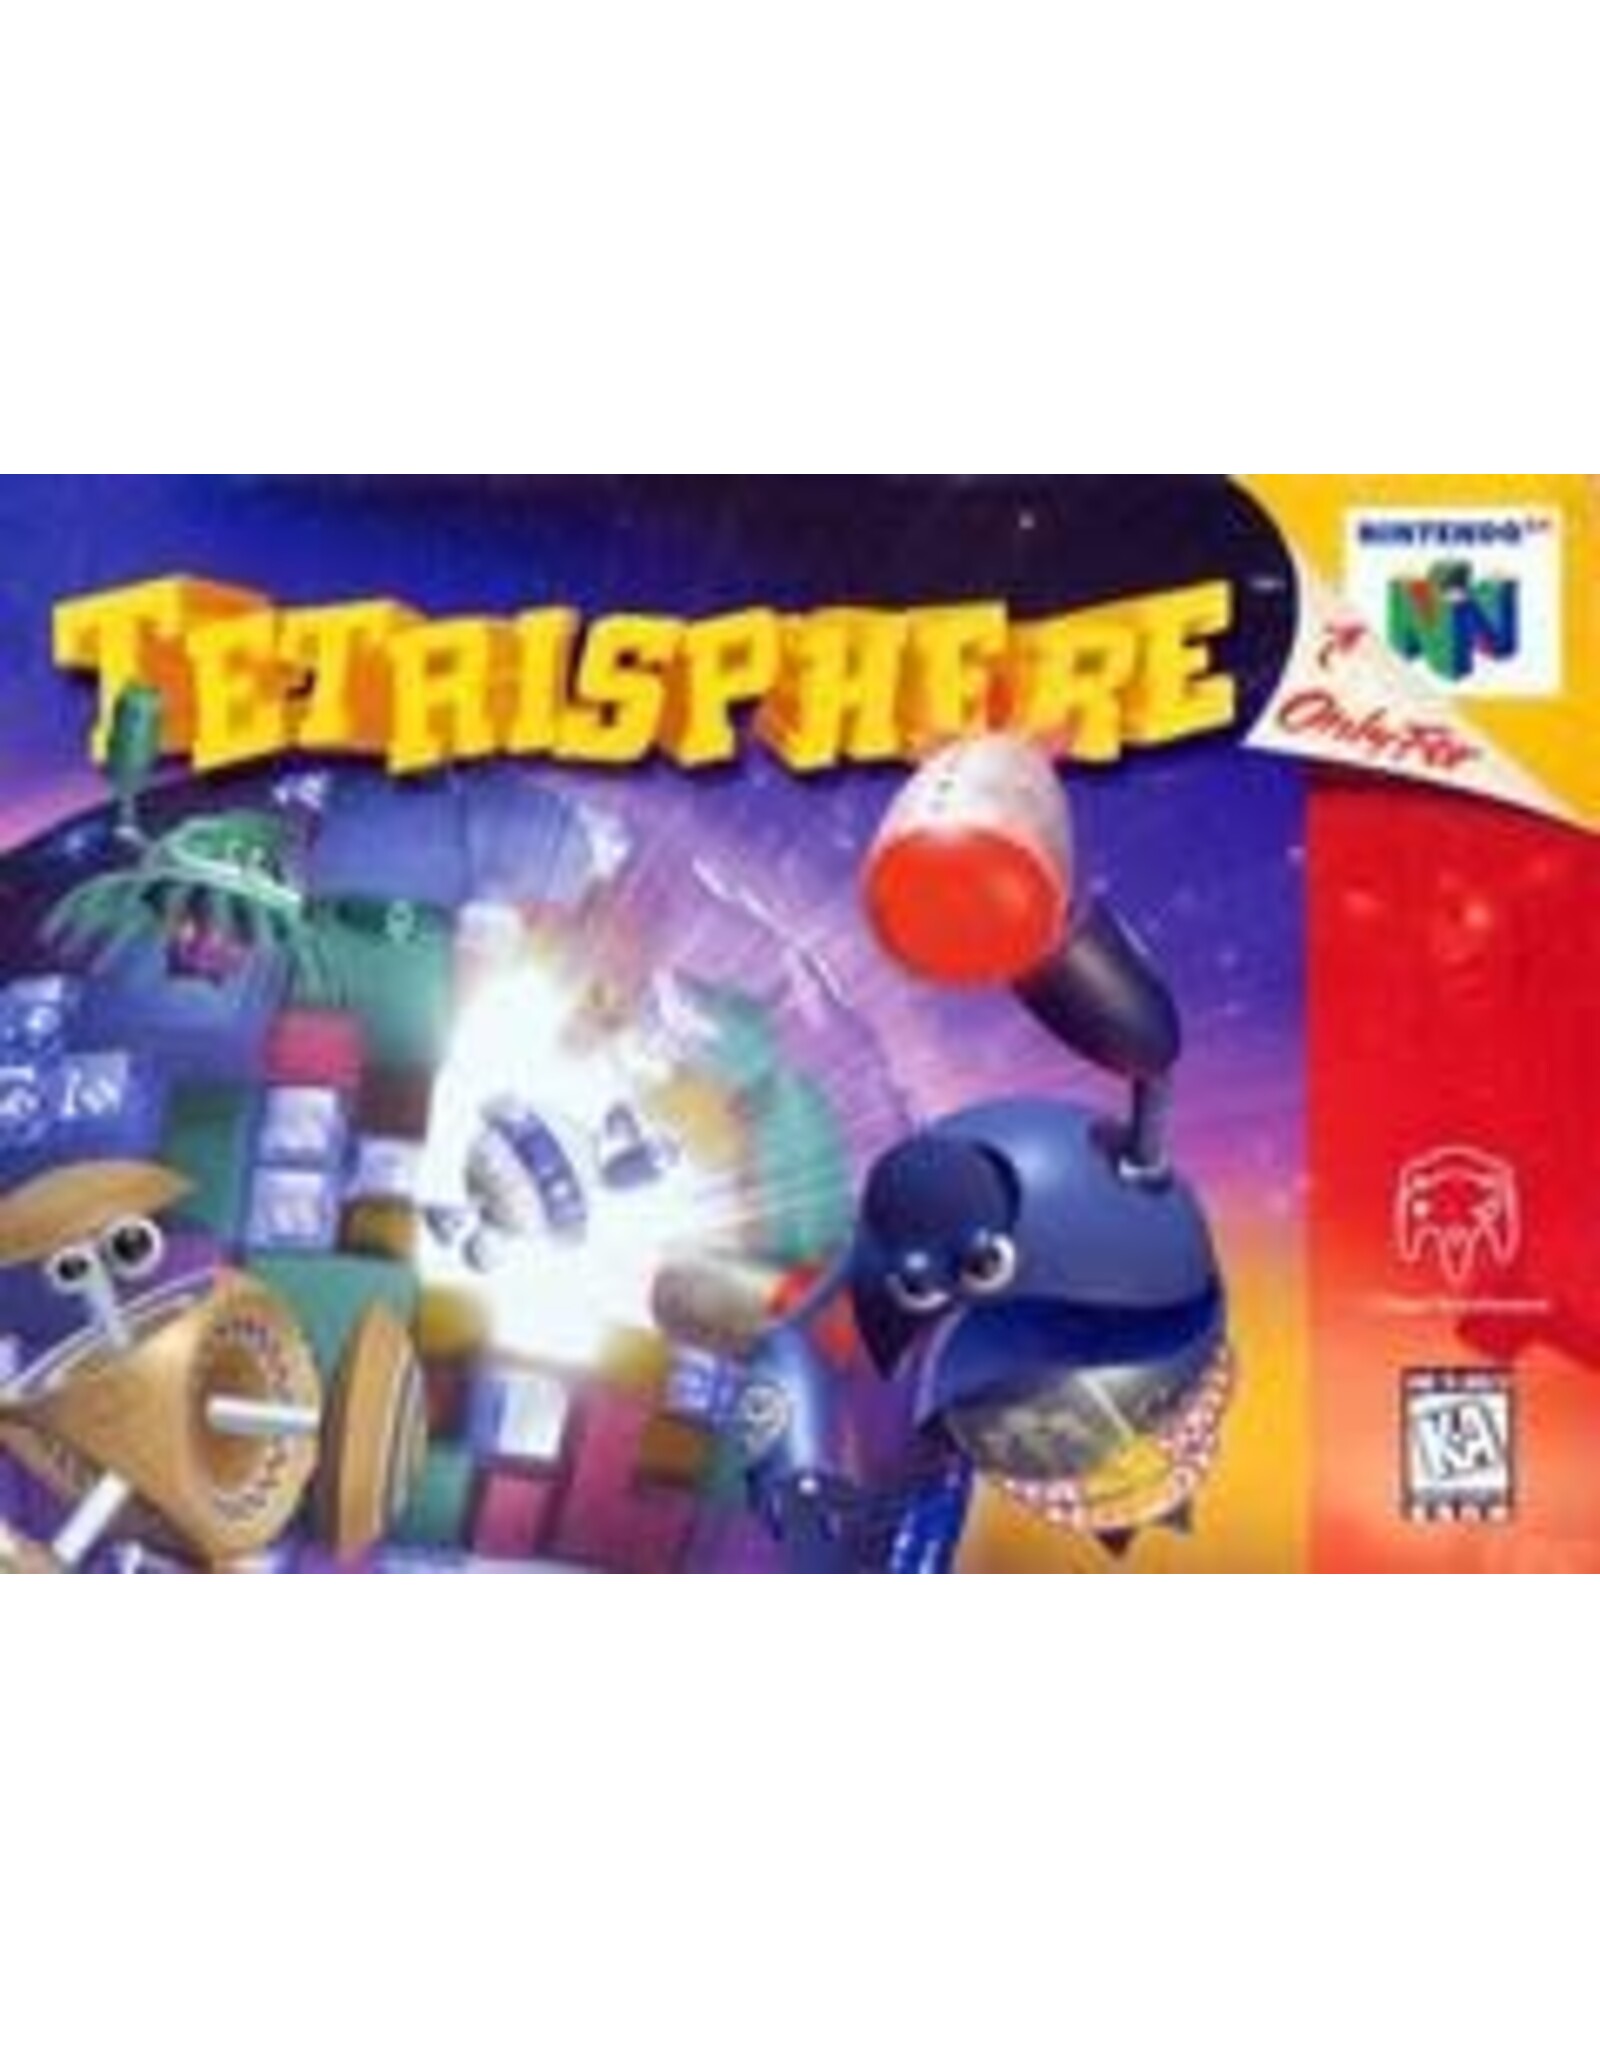 Nintendo 64 Tetrisphere (Cart Only)